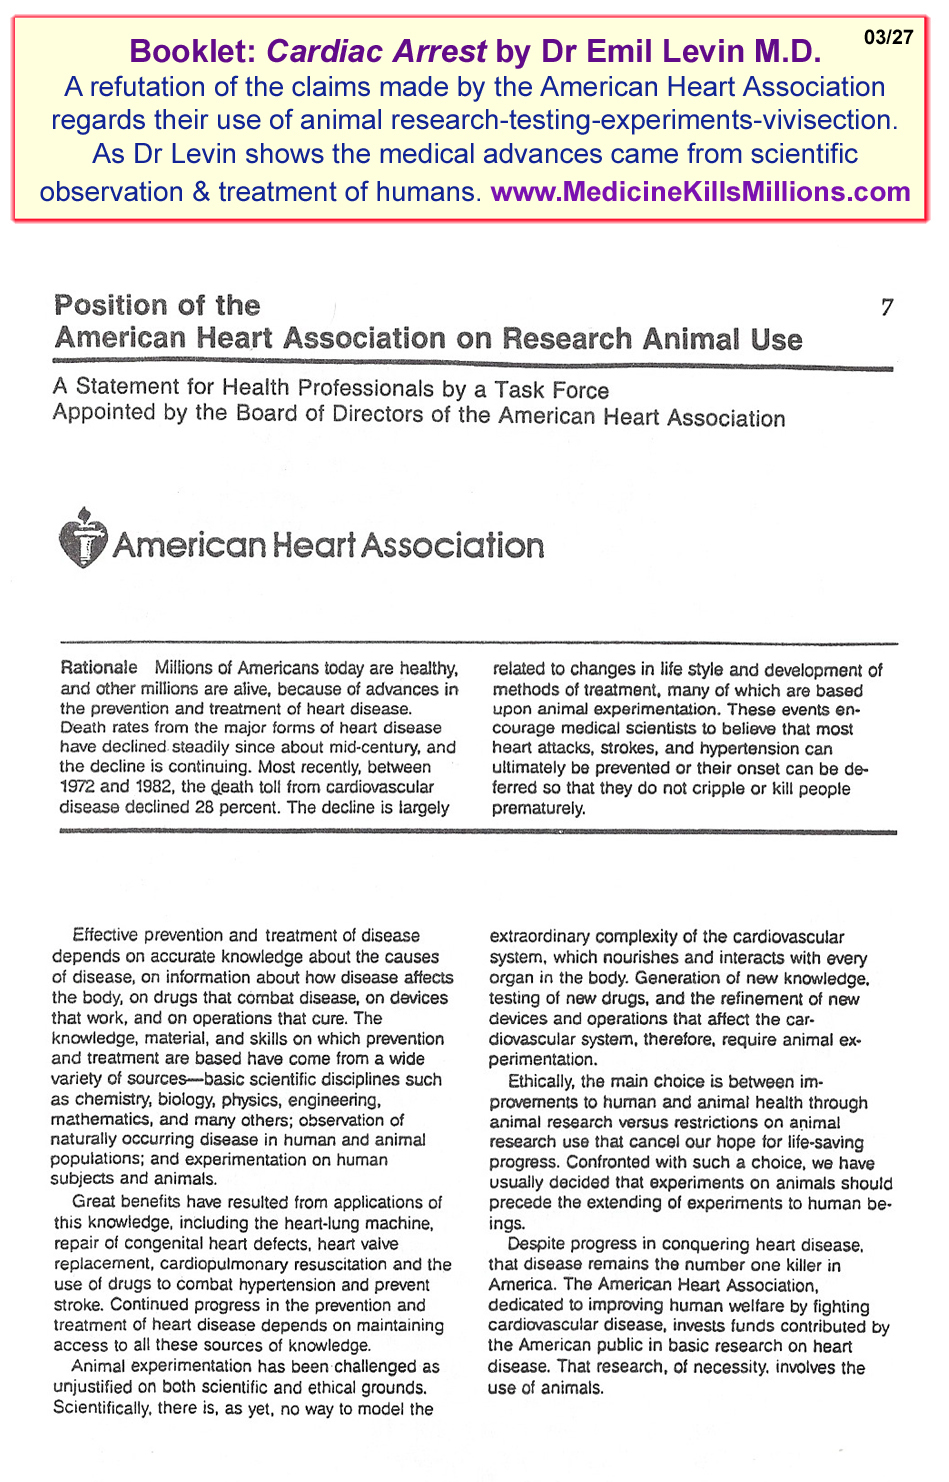 Cardiac-Arrest-03-Position-of-American-Heart-Association-on-Animal-Research-Use.jpg